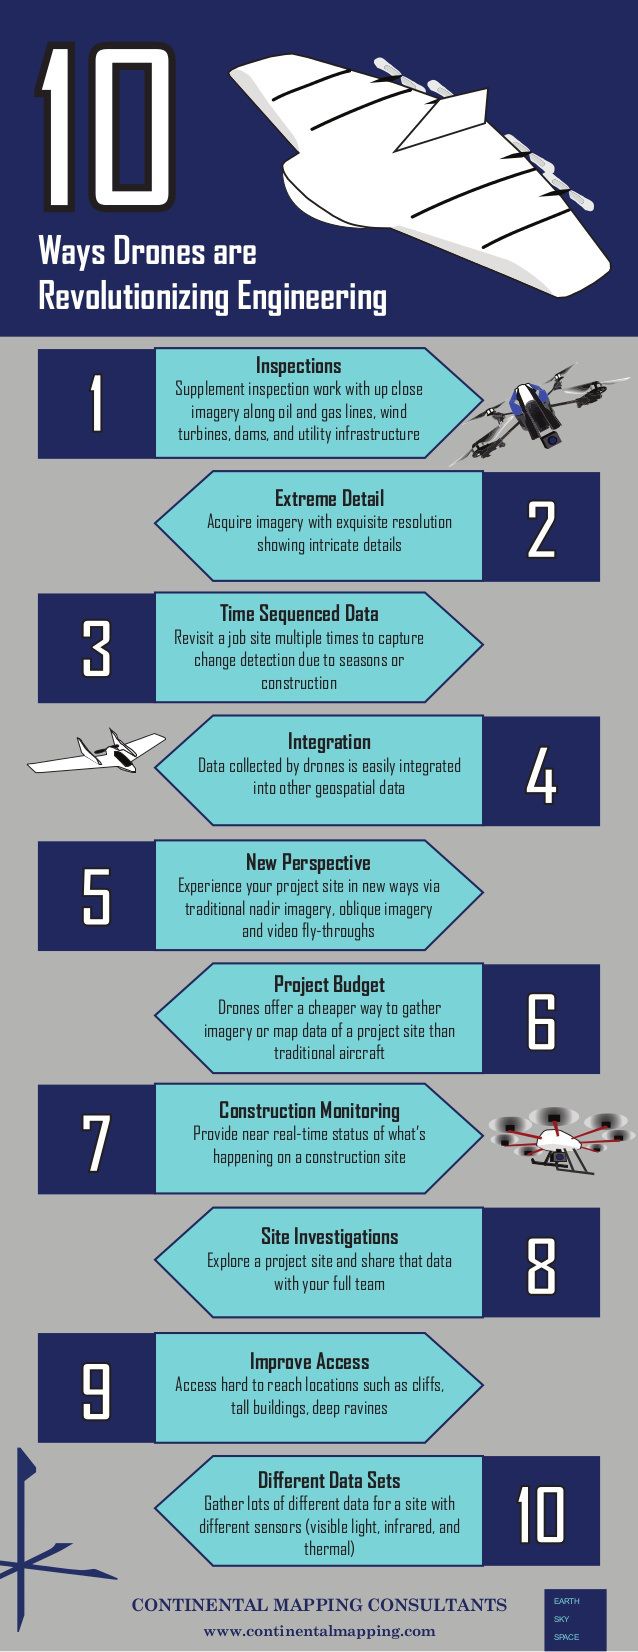 10 ways drones are revolutionizing engineering